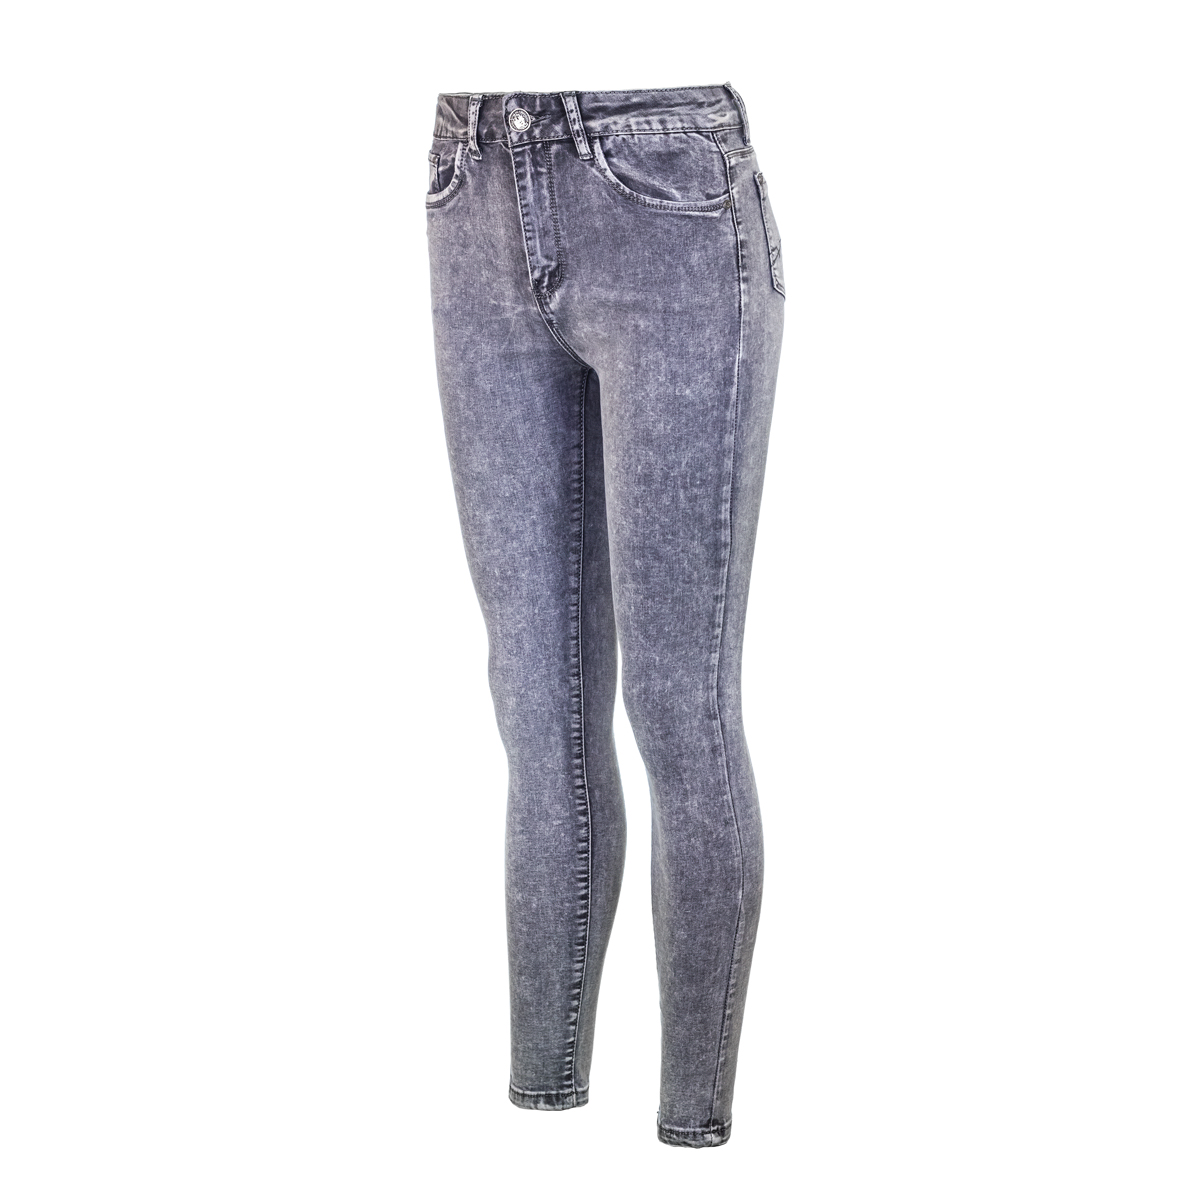 Жен. джинсы арт. 12-0087 Серый р. 28 -, размер 28 - фото 3